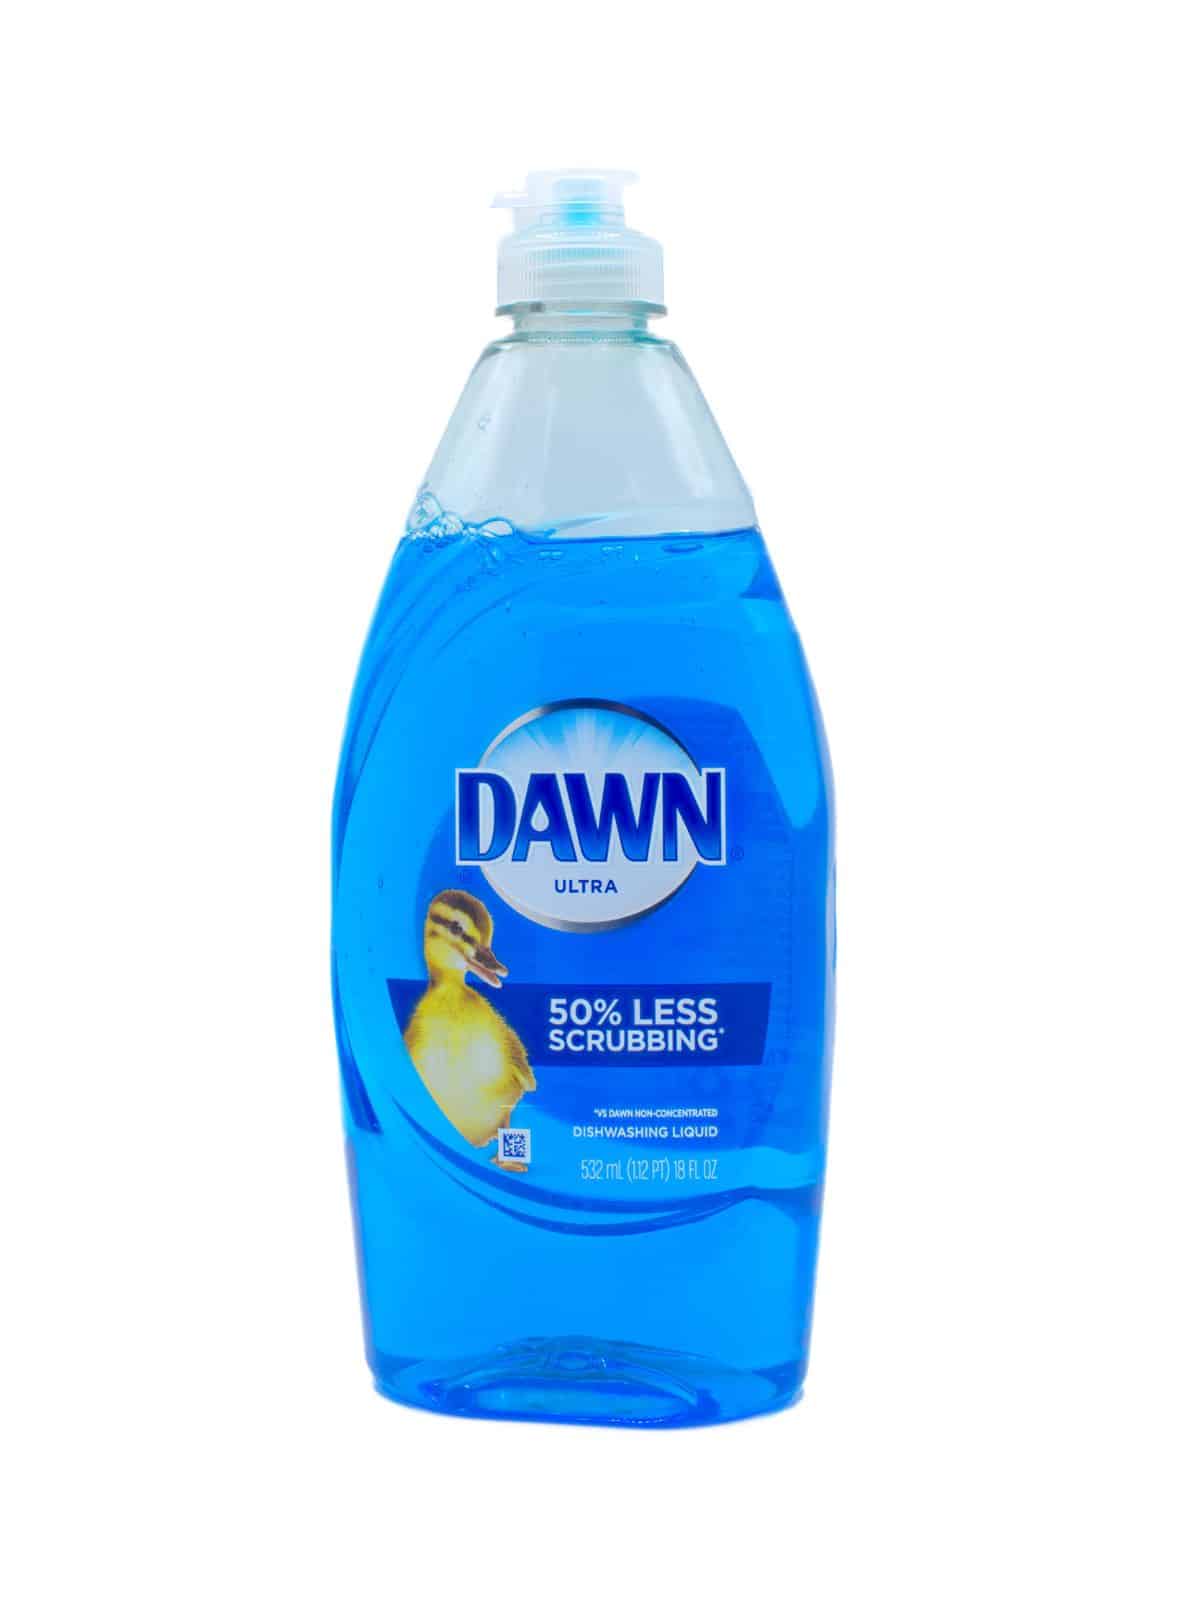 Blue Dawn dishwashing liquid on a white background.